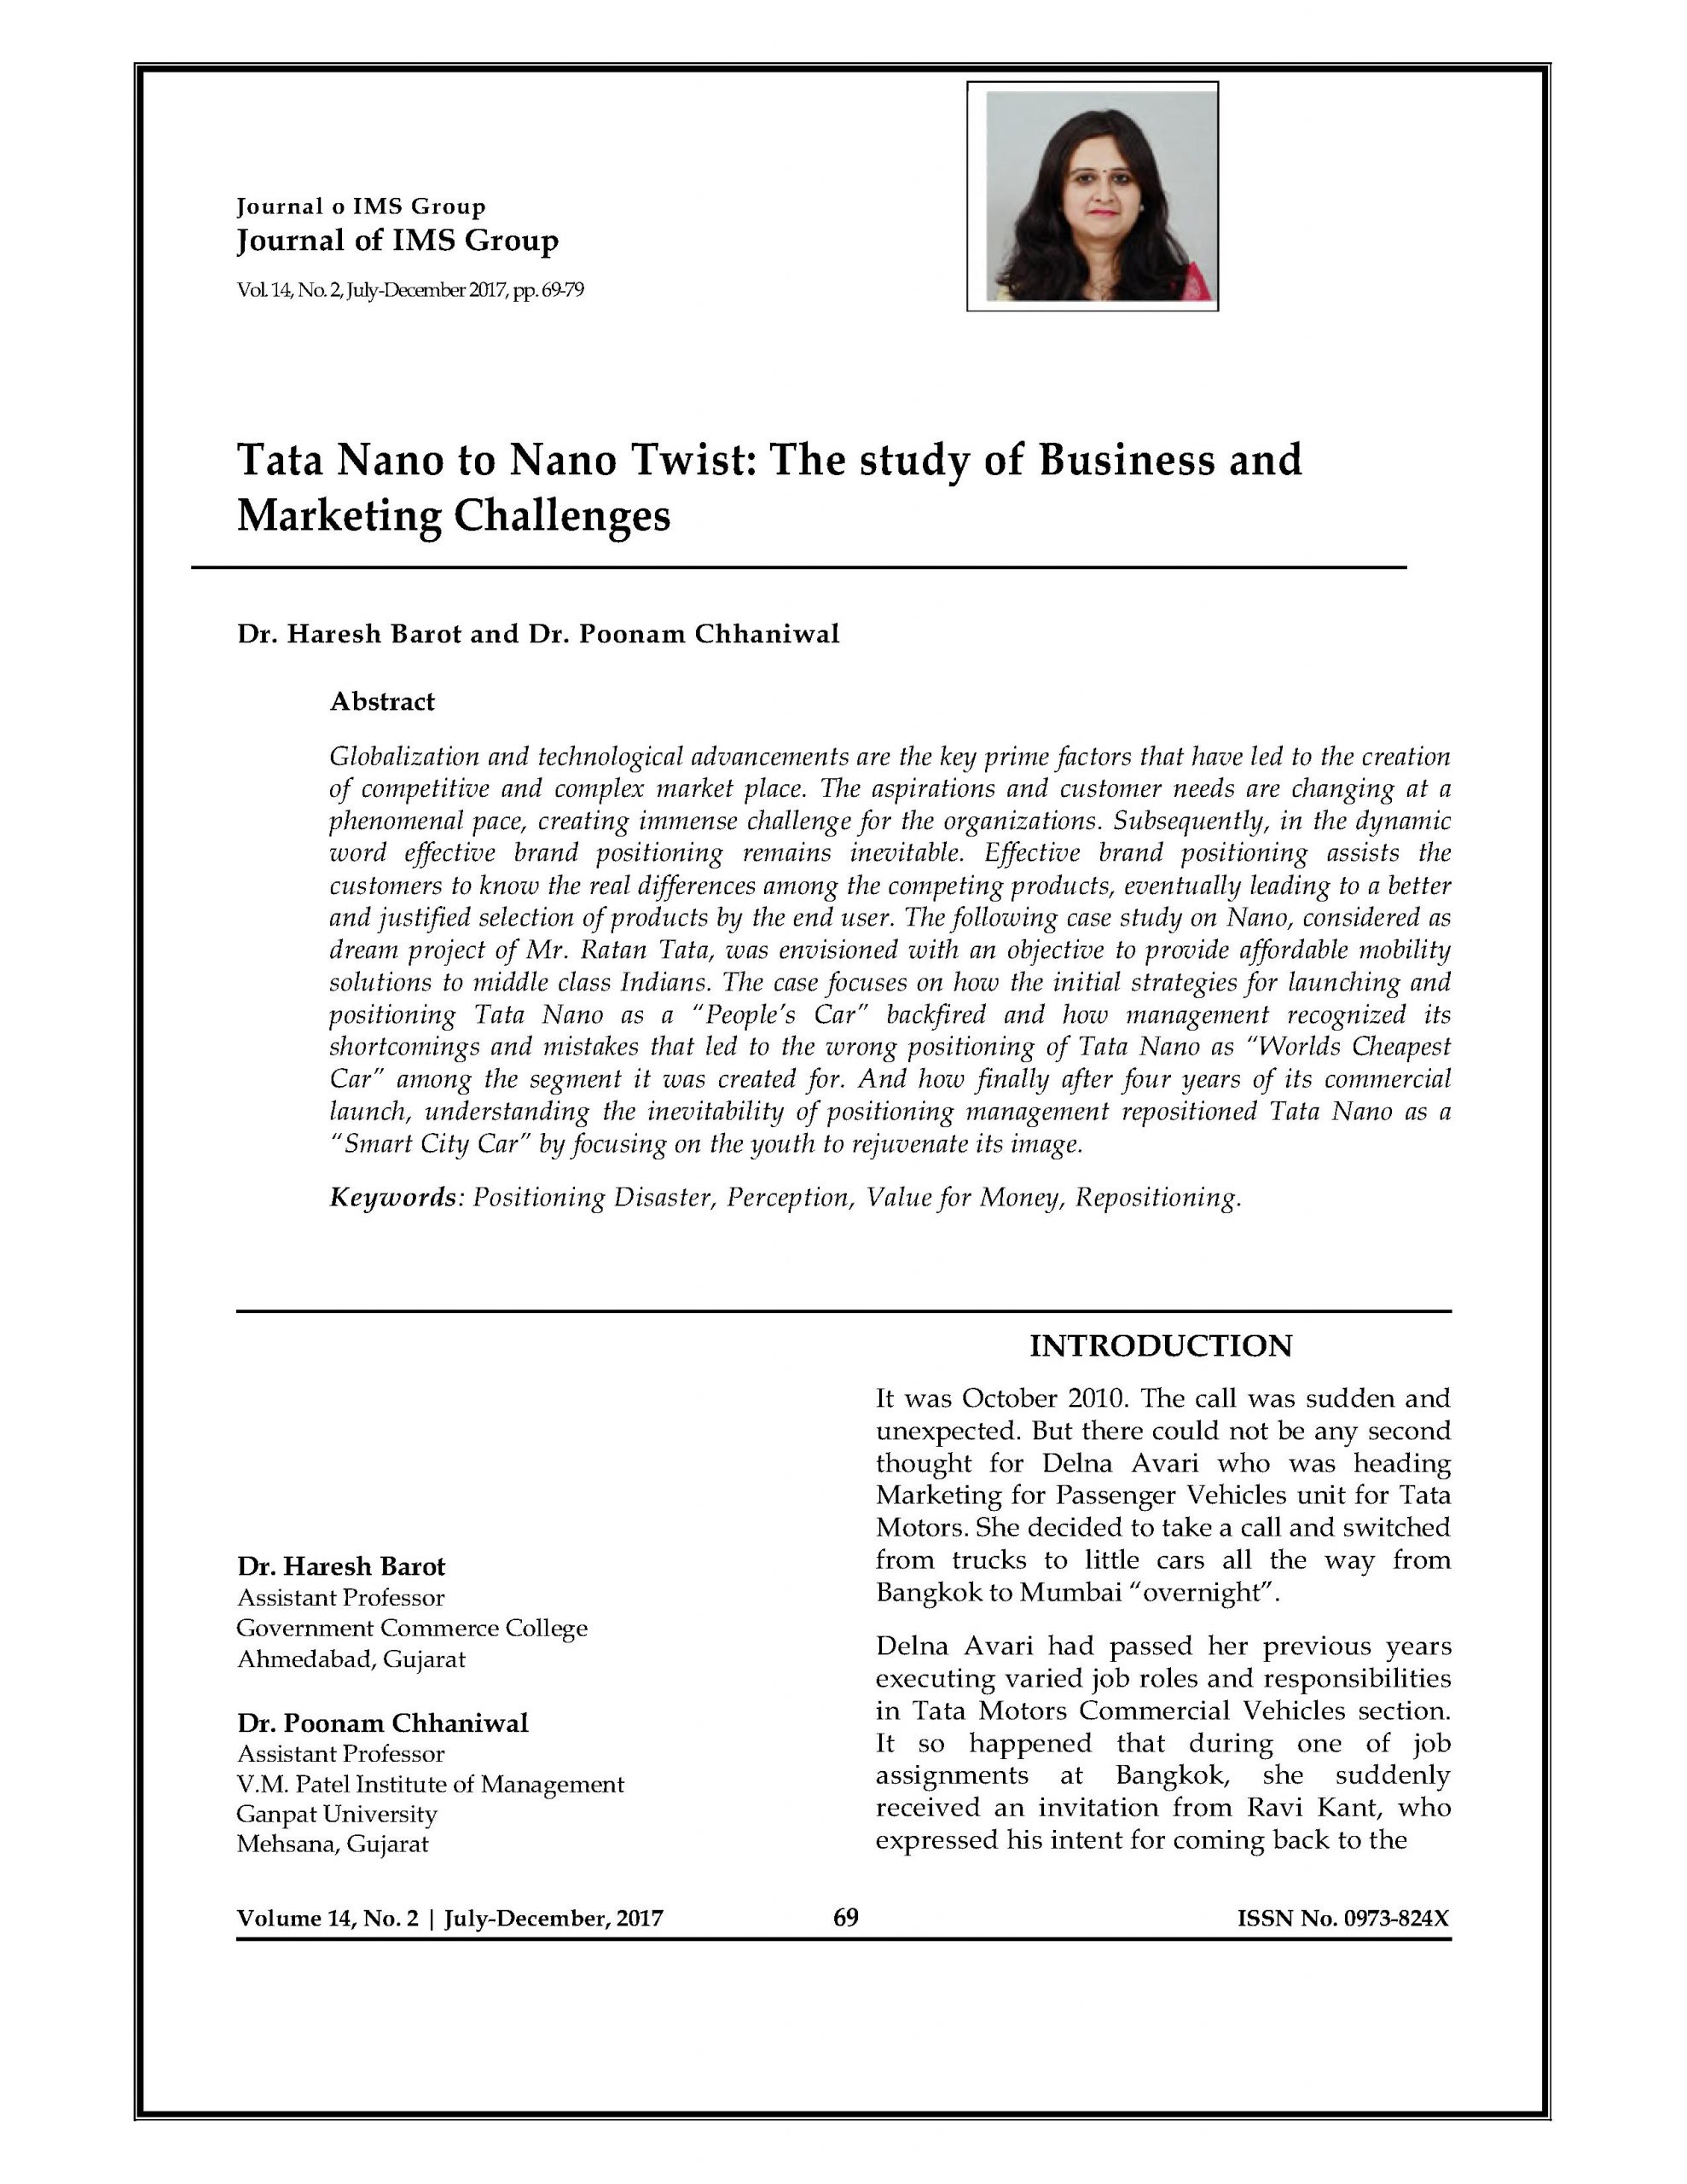 Tata Nano to Nano Twist: The study of Business and Marketing Challenges